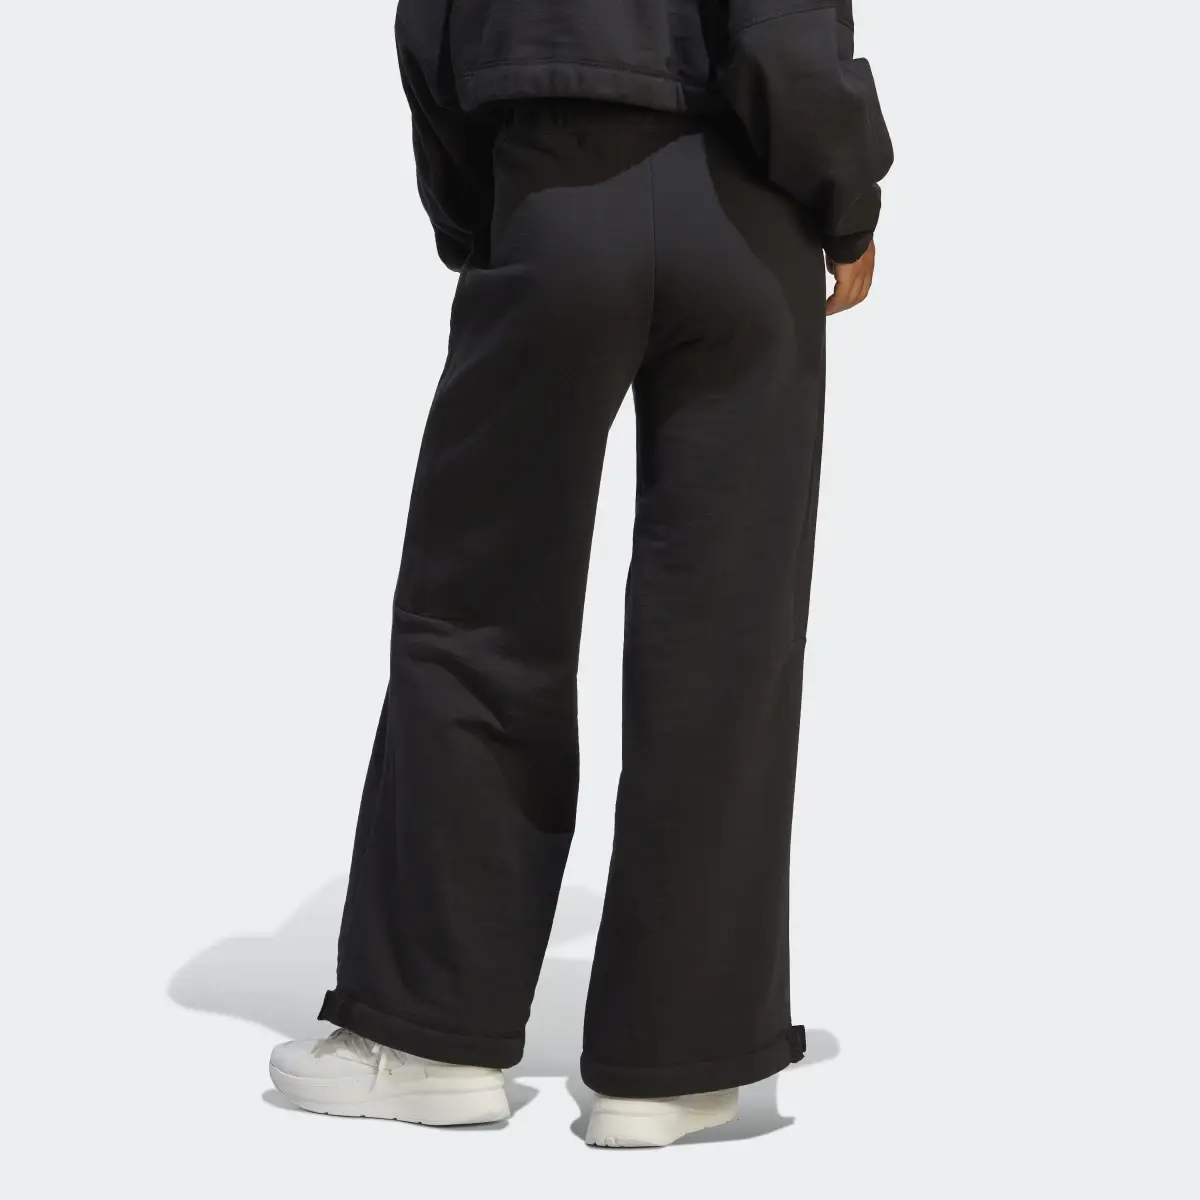 Adidas Dance Versatile Knit Pants. 2